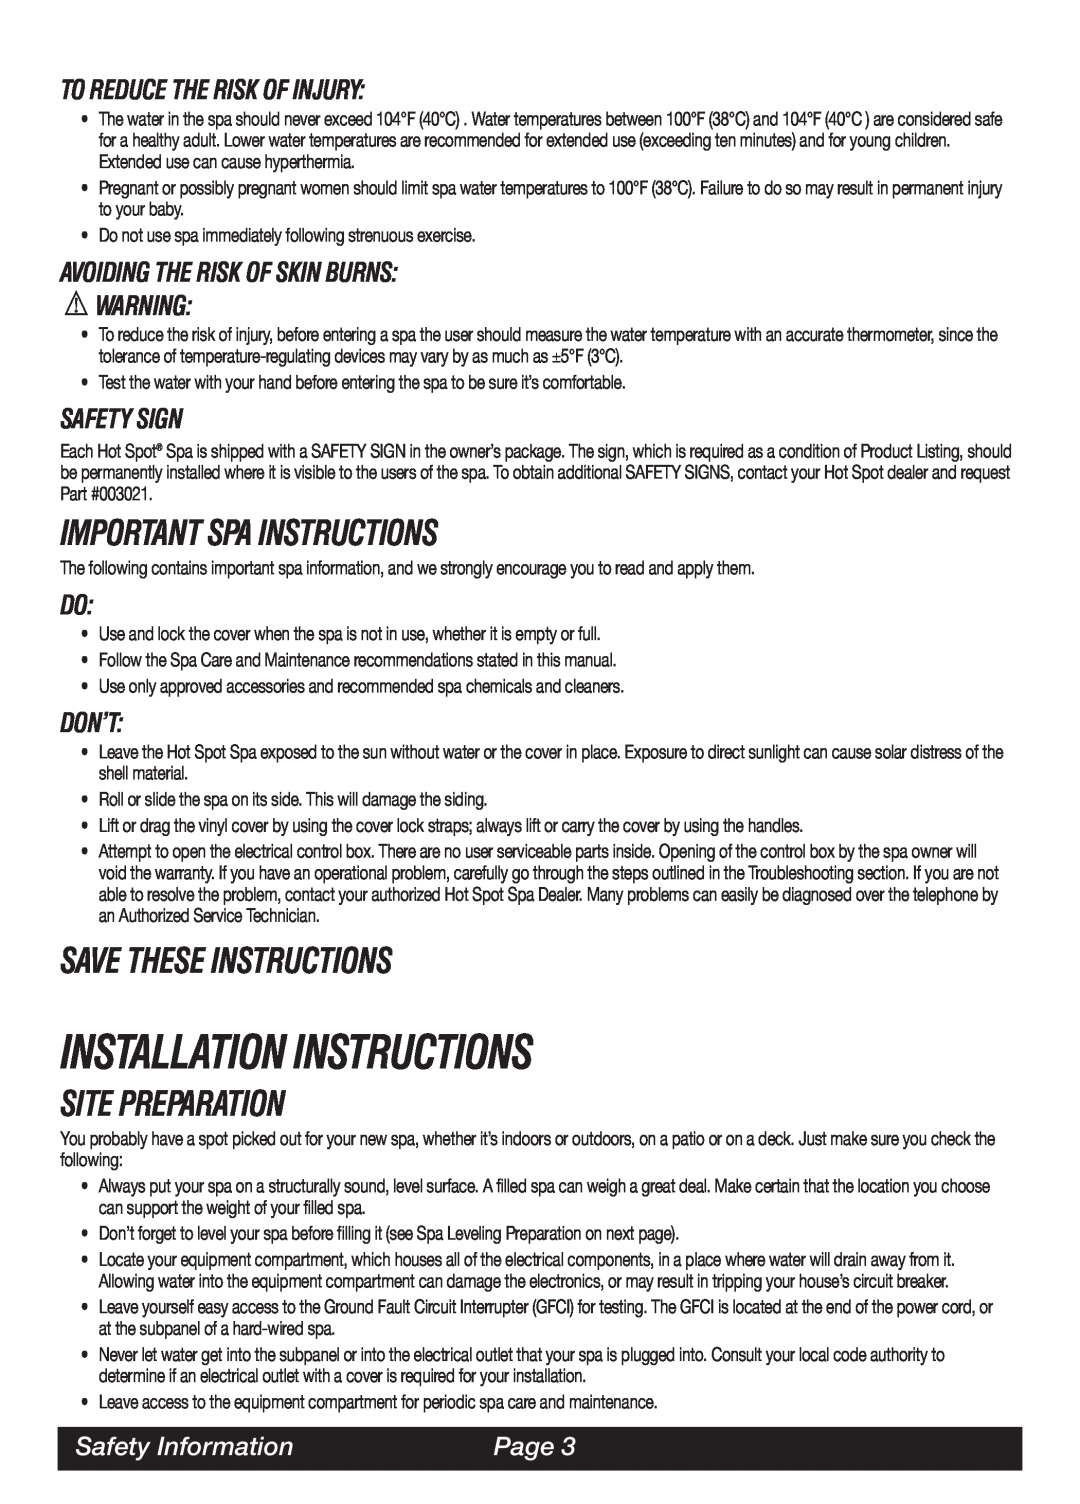 Watkins SOR Installation Instructions, Important Spa Instructions, Save These Instructions, Site Preparation, Safety Sign 